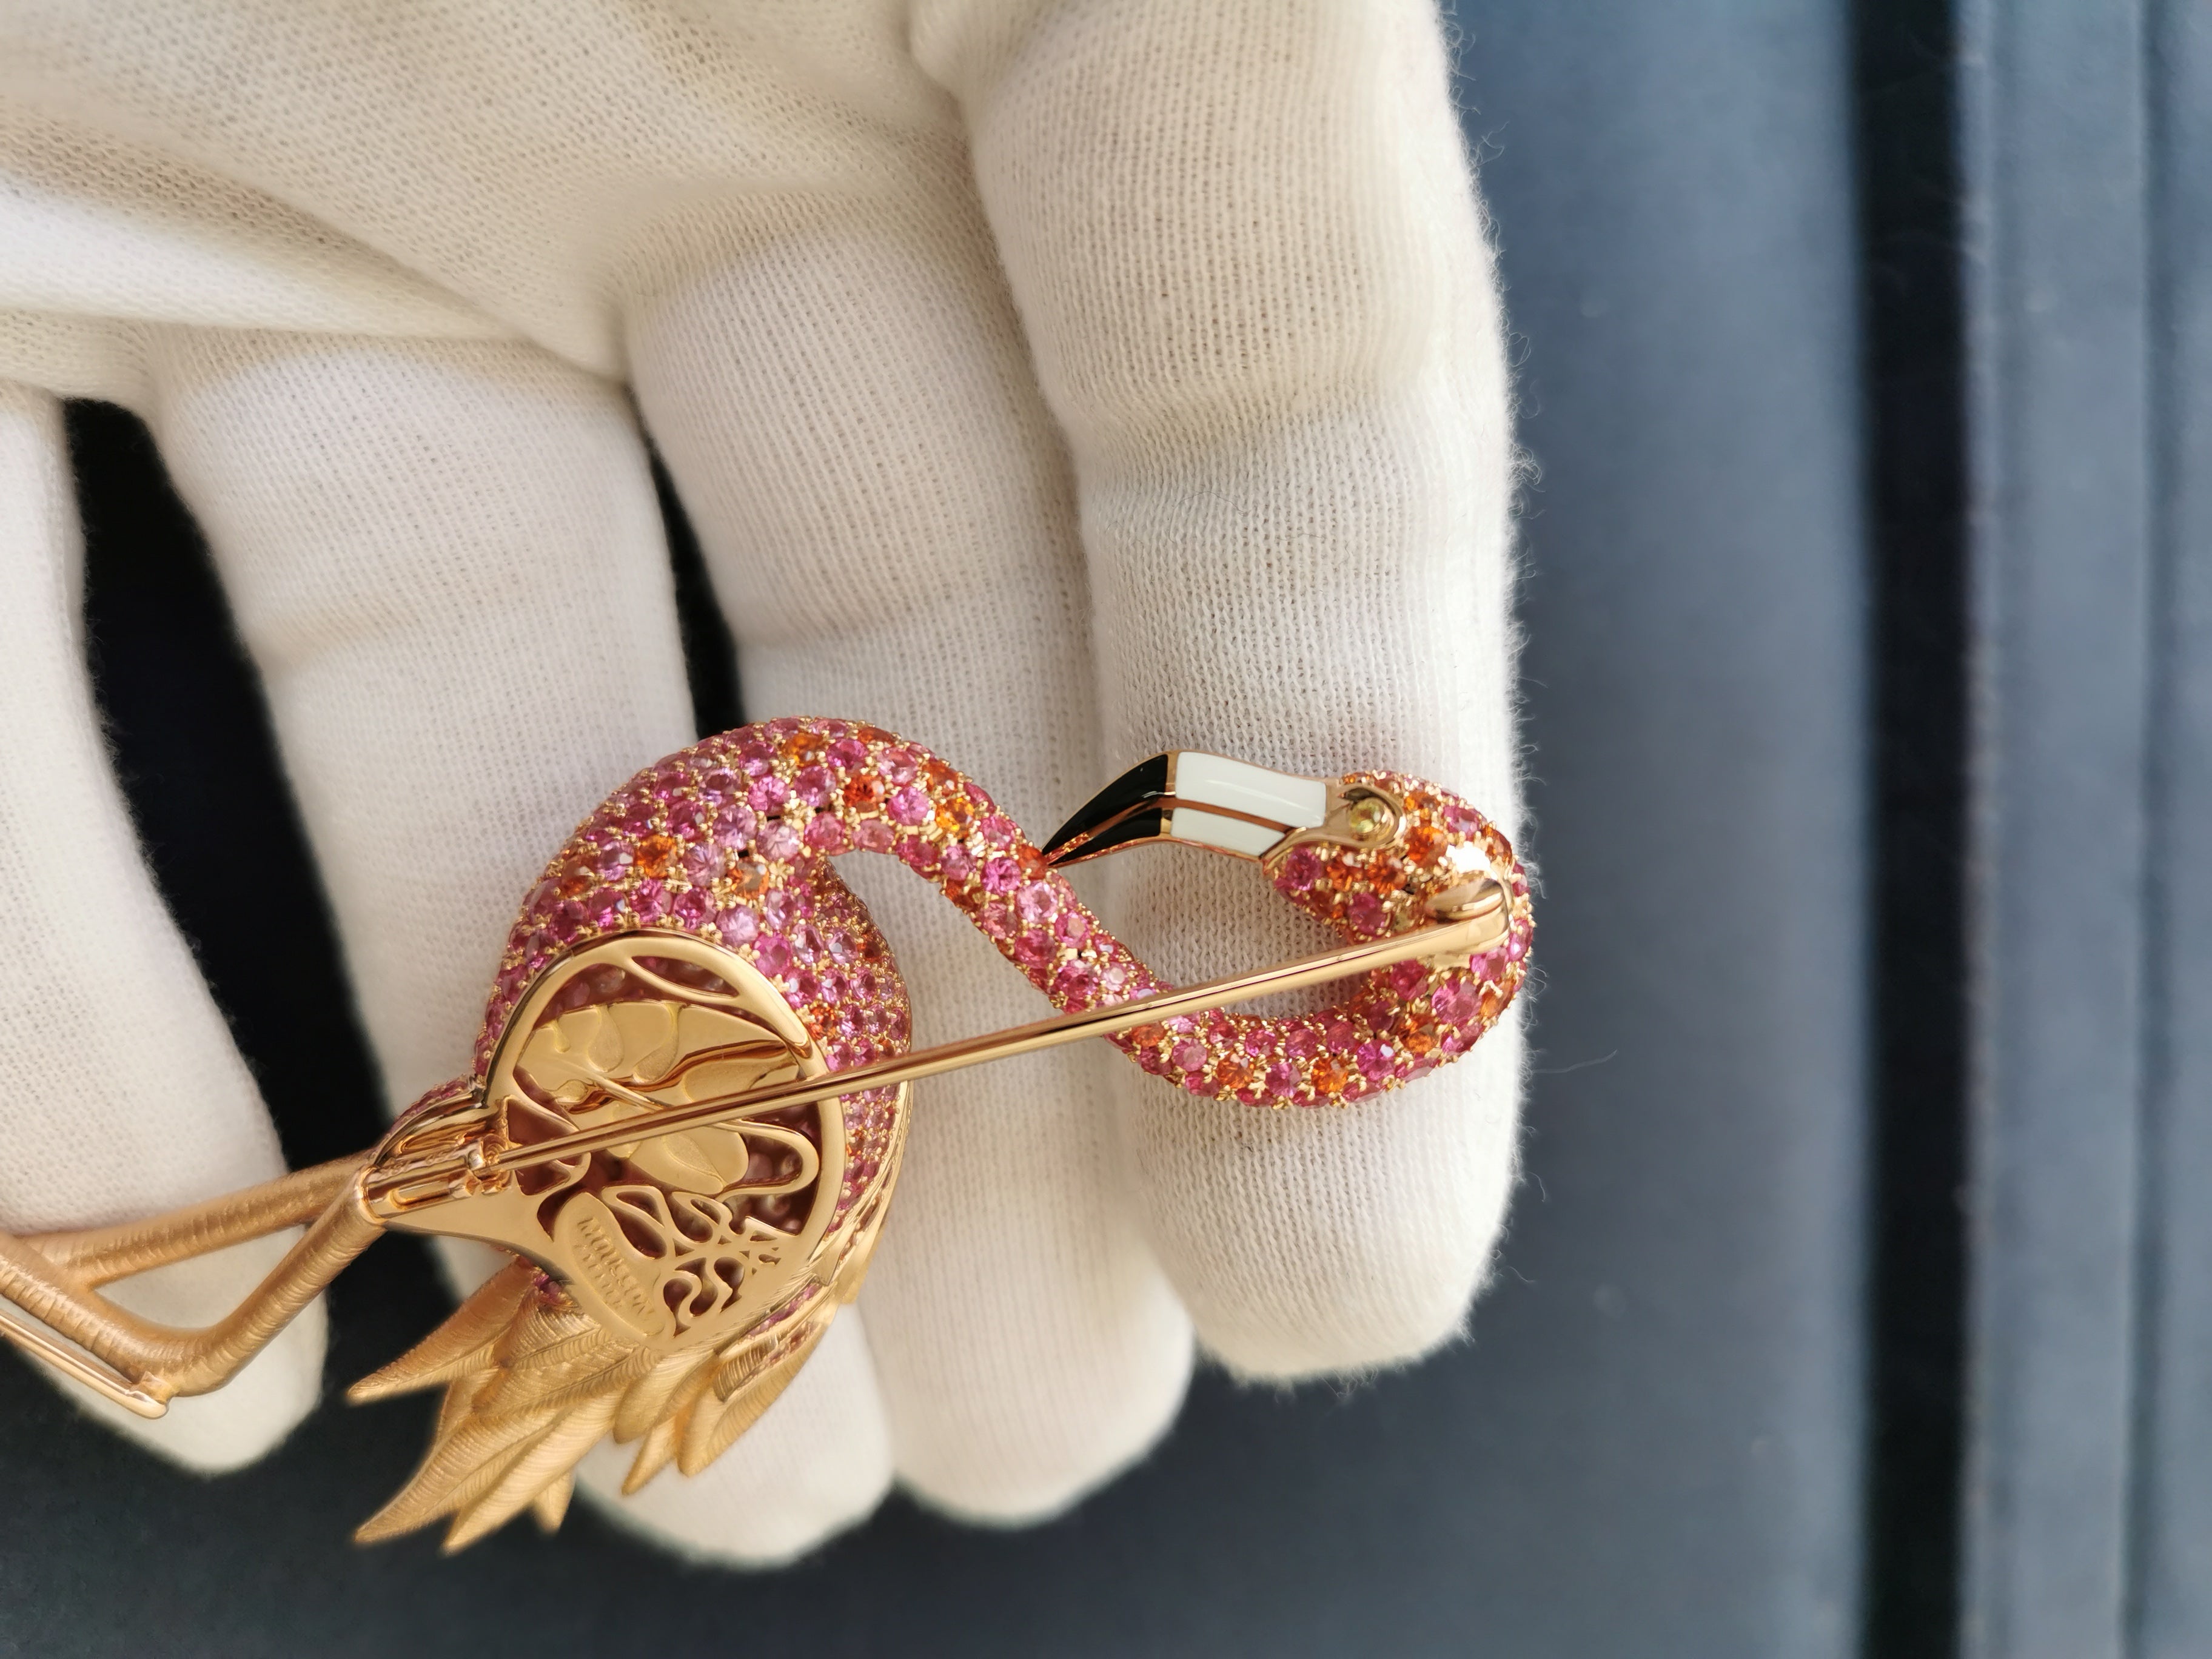 Brs 0170-1, 18K Rose Gold, Enamel, Pink and Orange Sapphires, Diamonds Flamingo Brooch